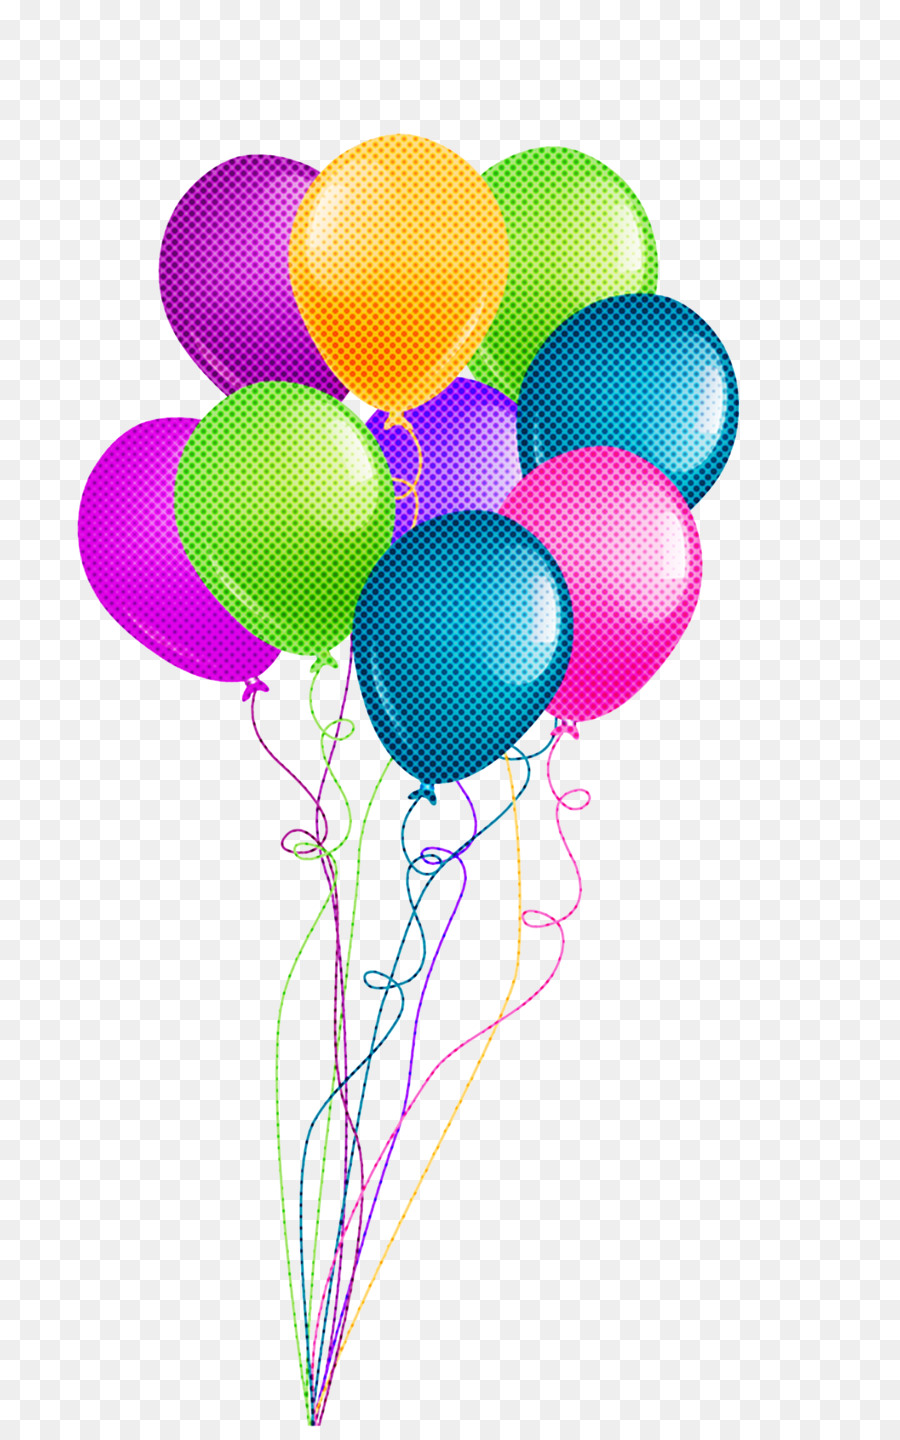 balloon party supply graphic design clip art